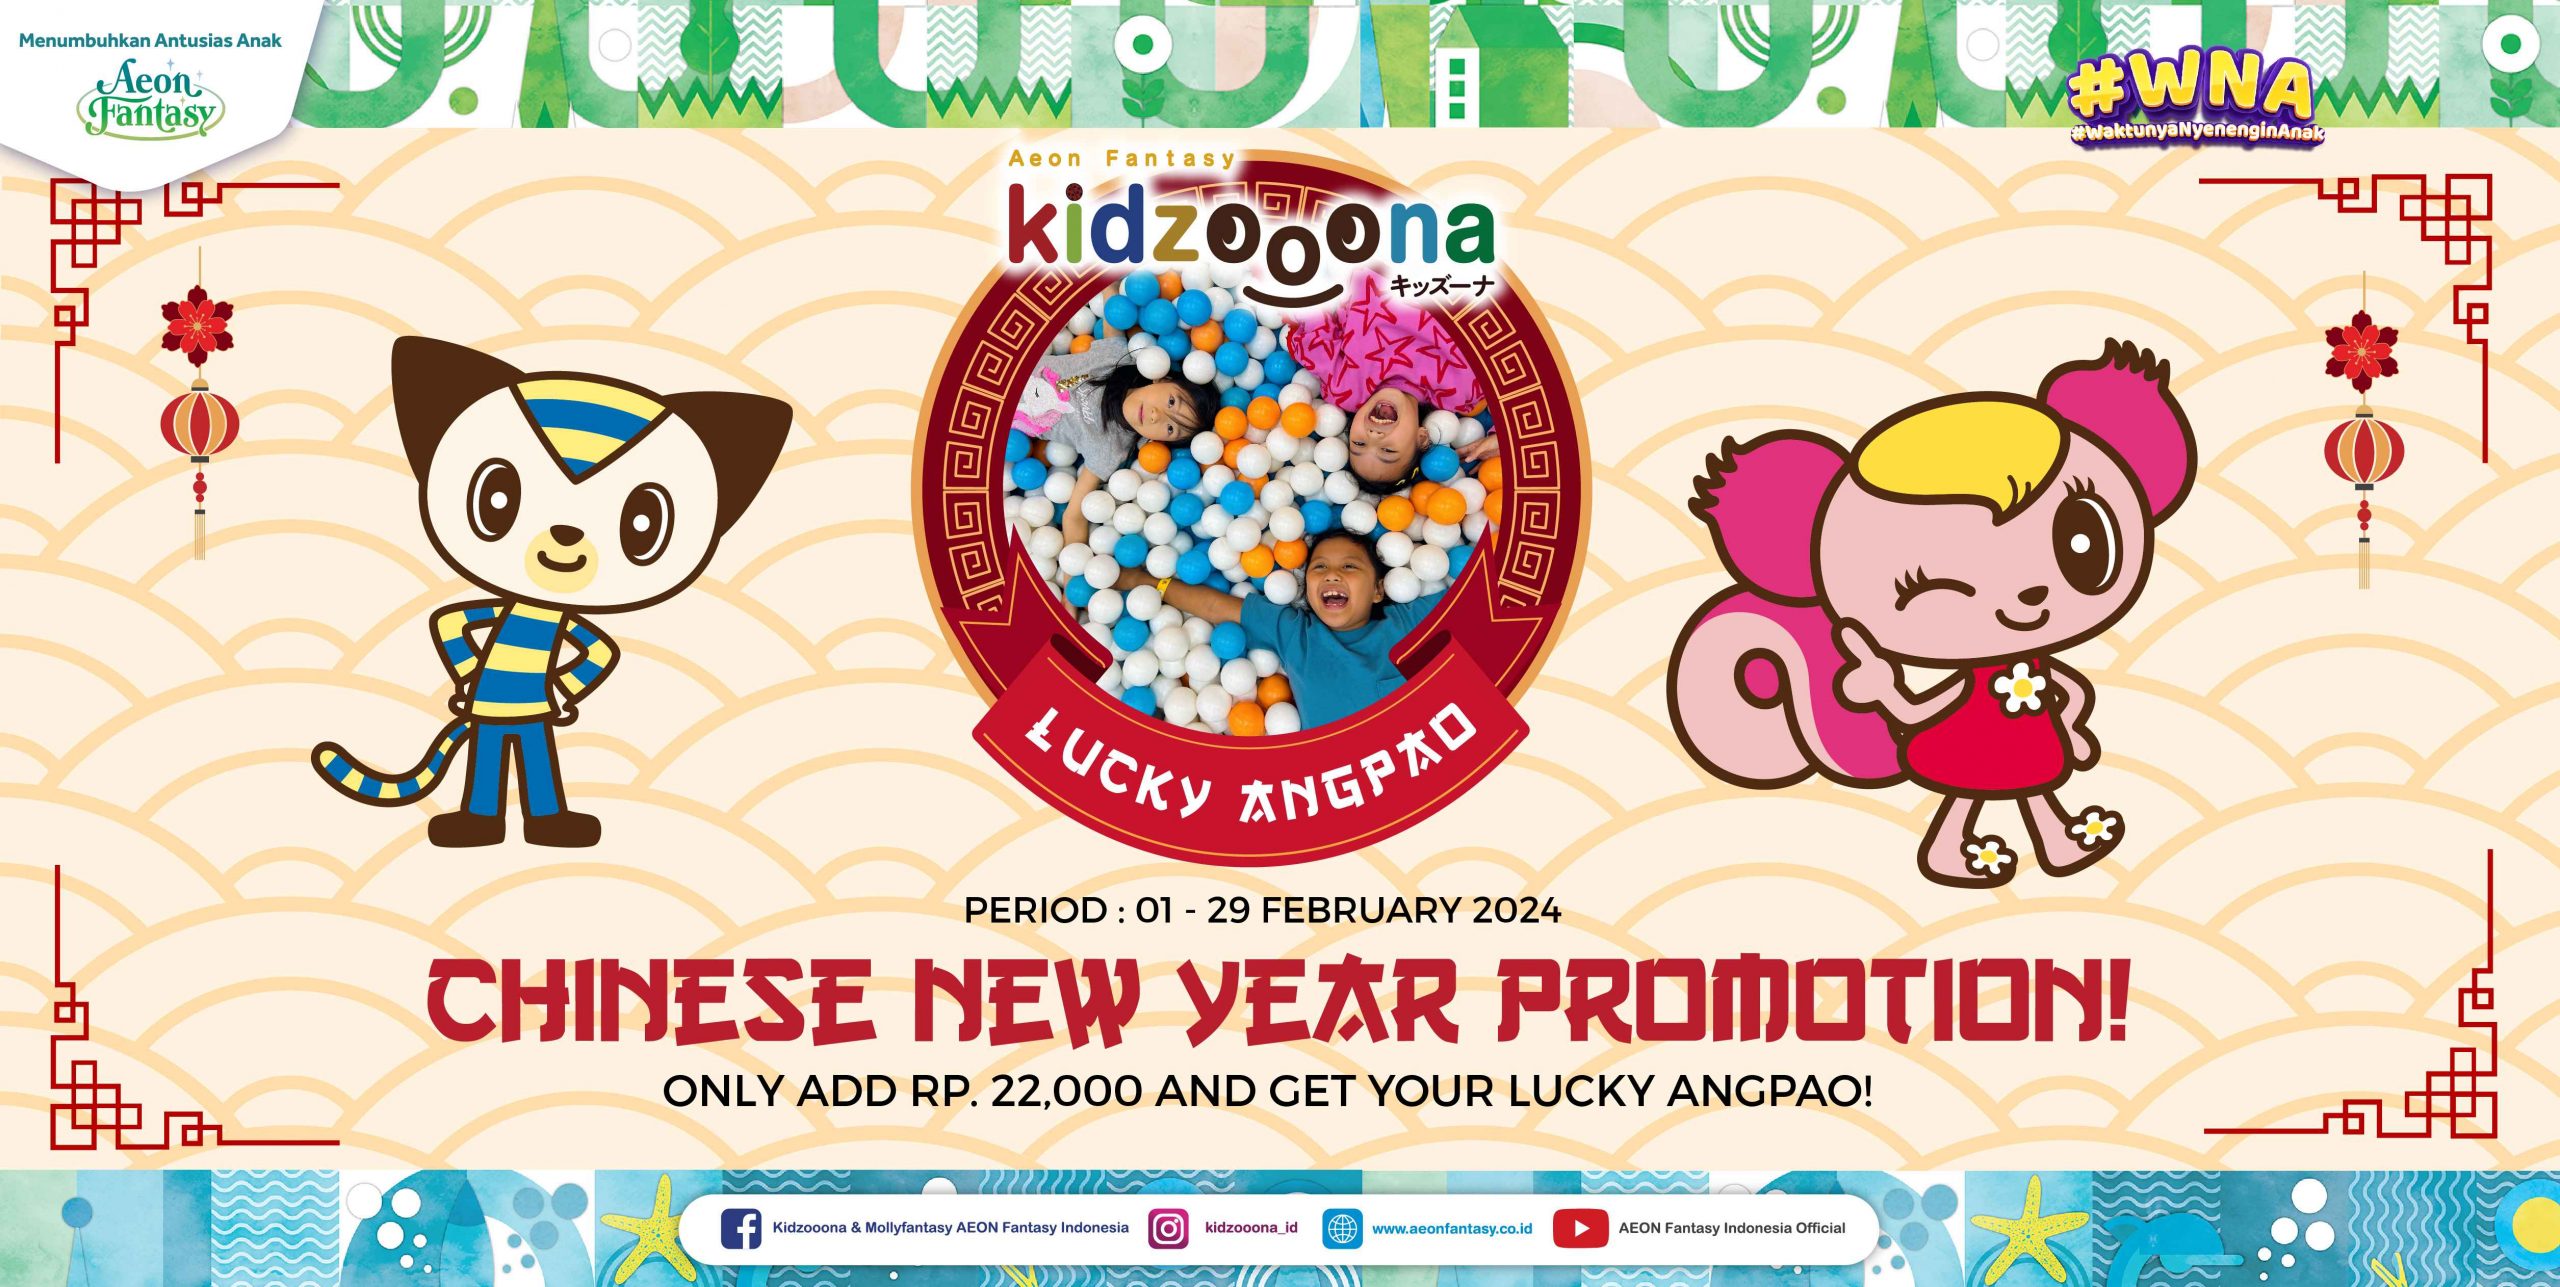 [KIDZOOONA] CHINESE NEW YEAR PROMOTION